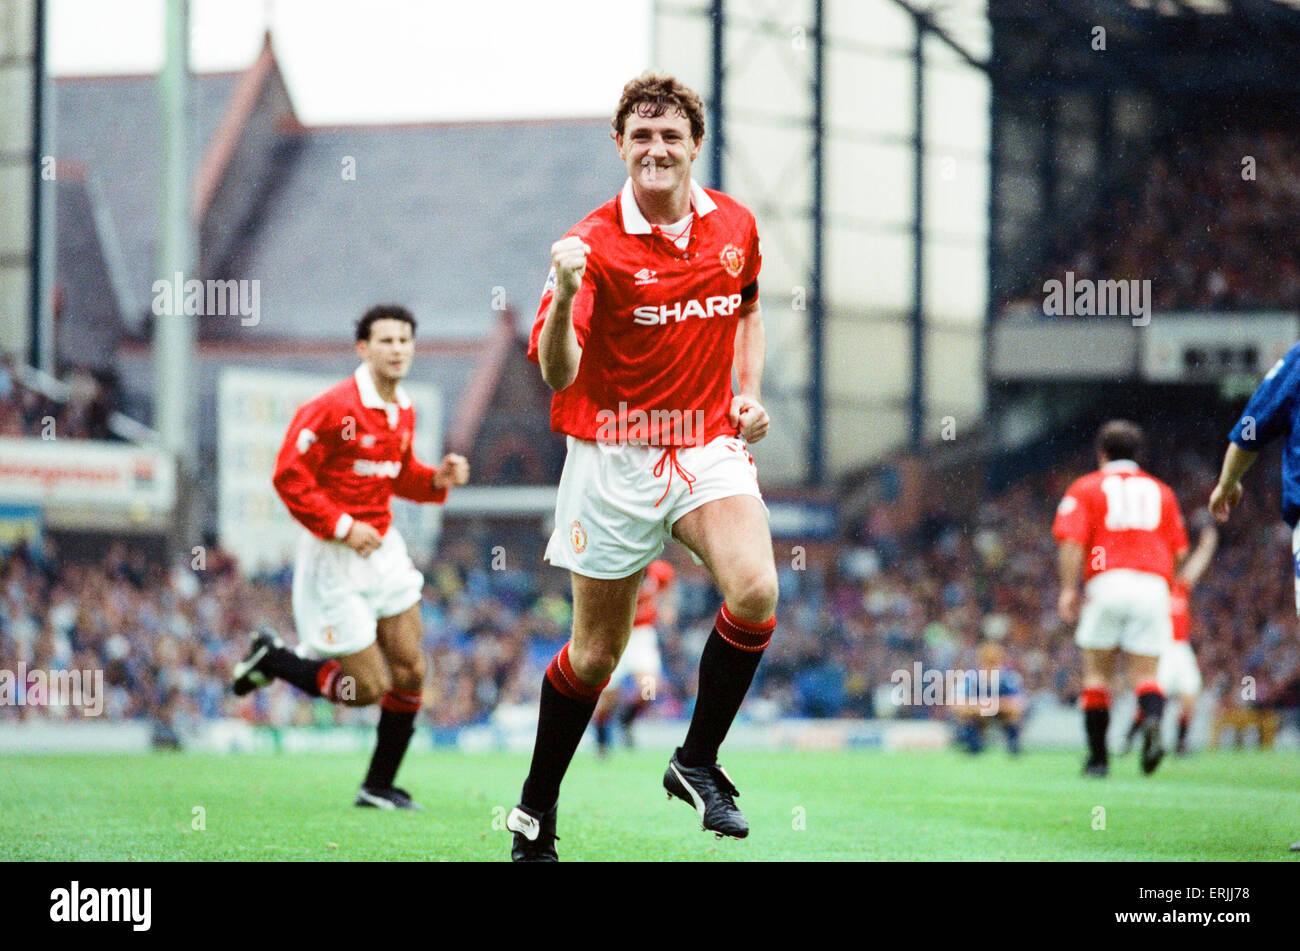 Everton 0-2 Manchester United, partido de liga en Goodison Park, el sábado 12 de septiembre de 1992. Steve Bruce celebra tras marcar gol. Foto de stock